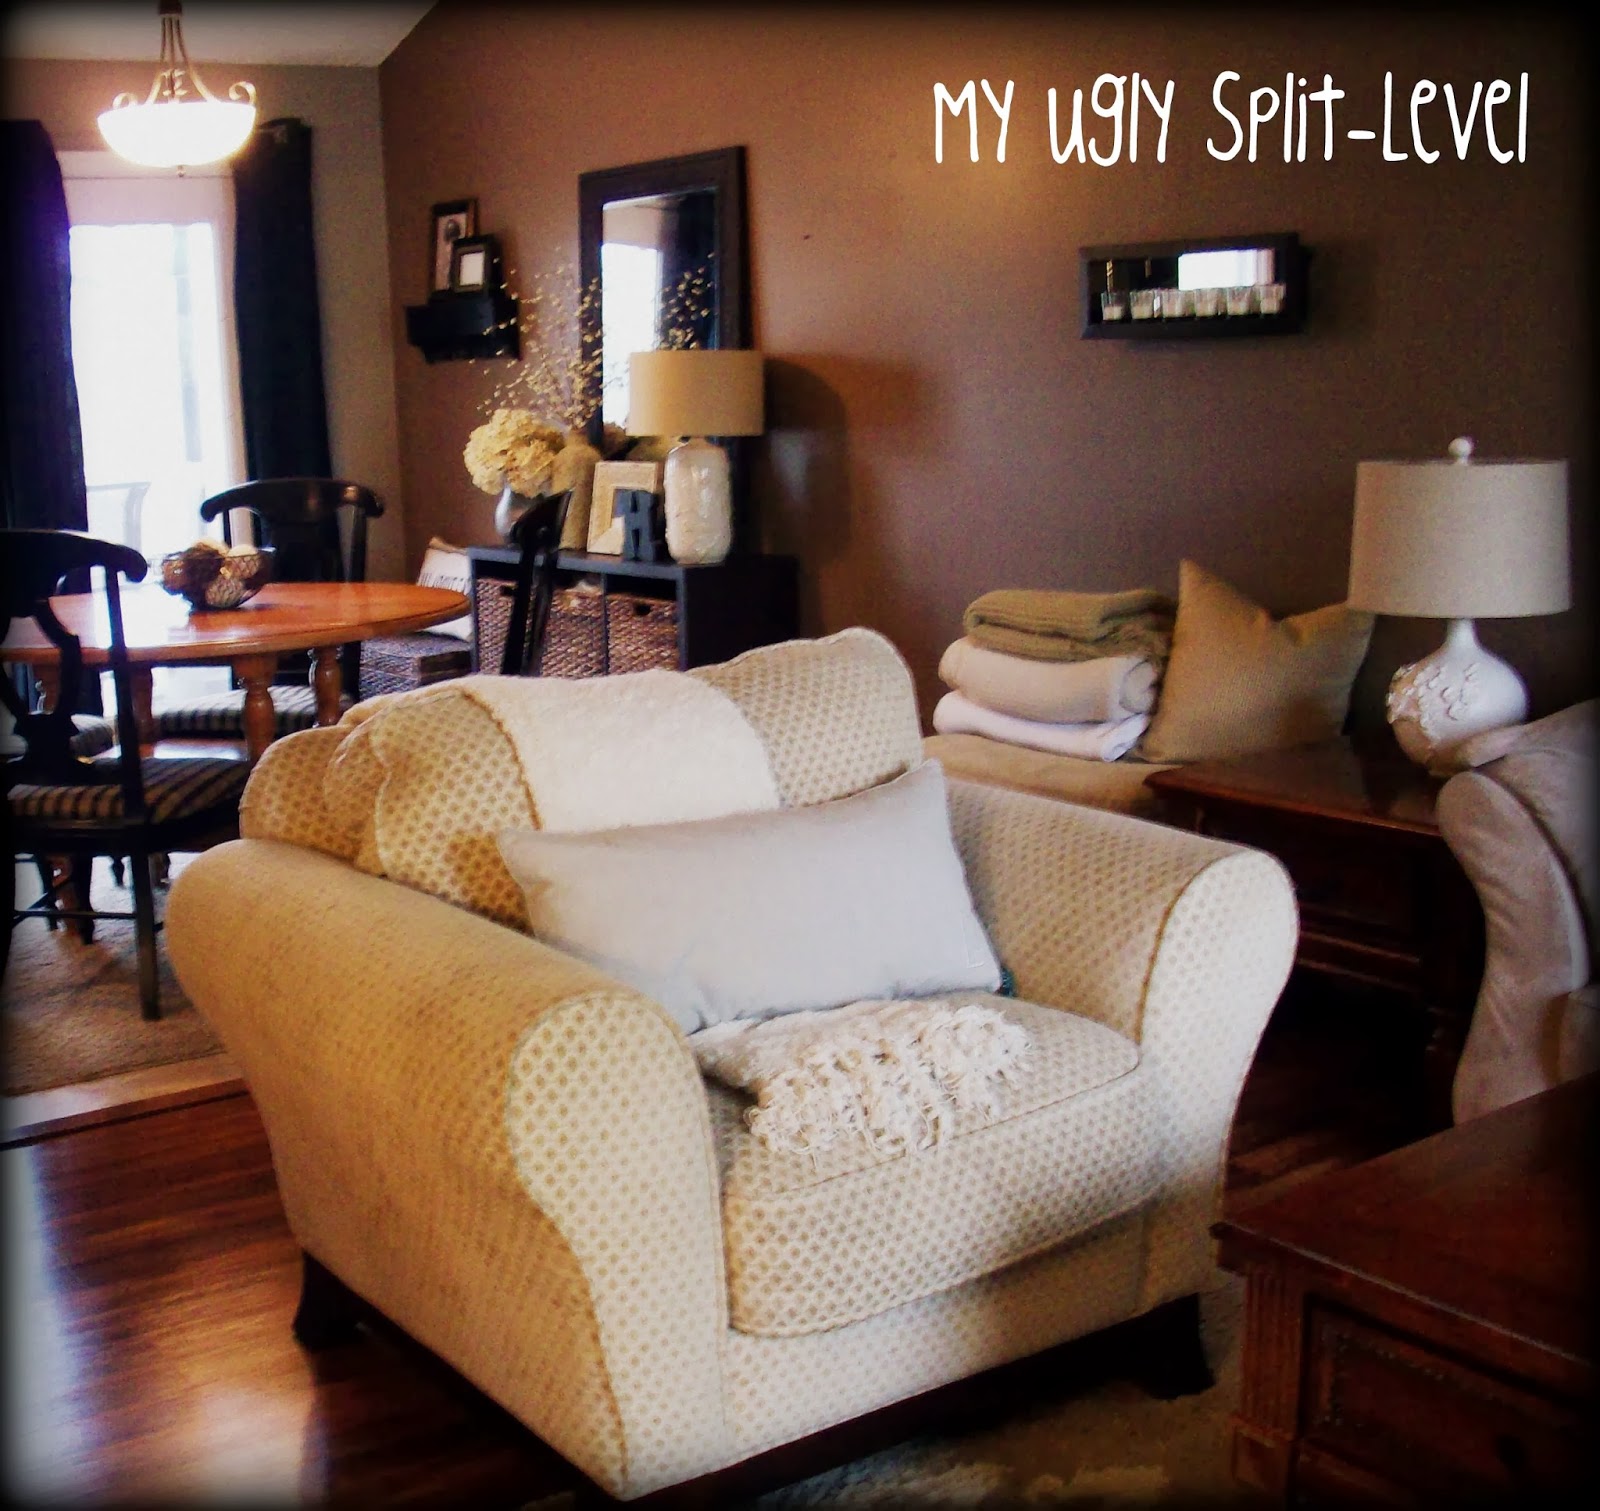 My Ugly Split-level: The Living Room